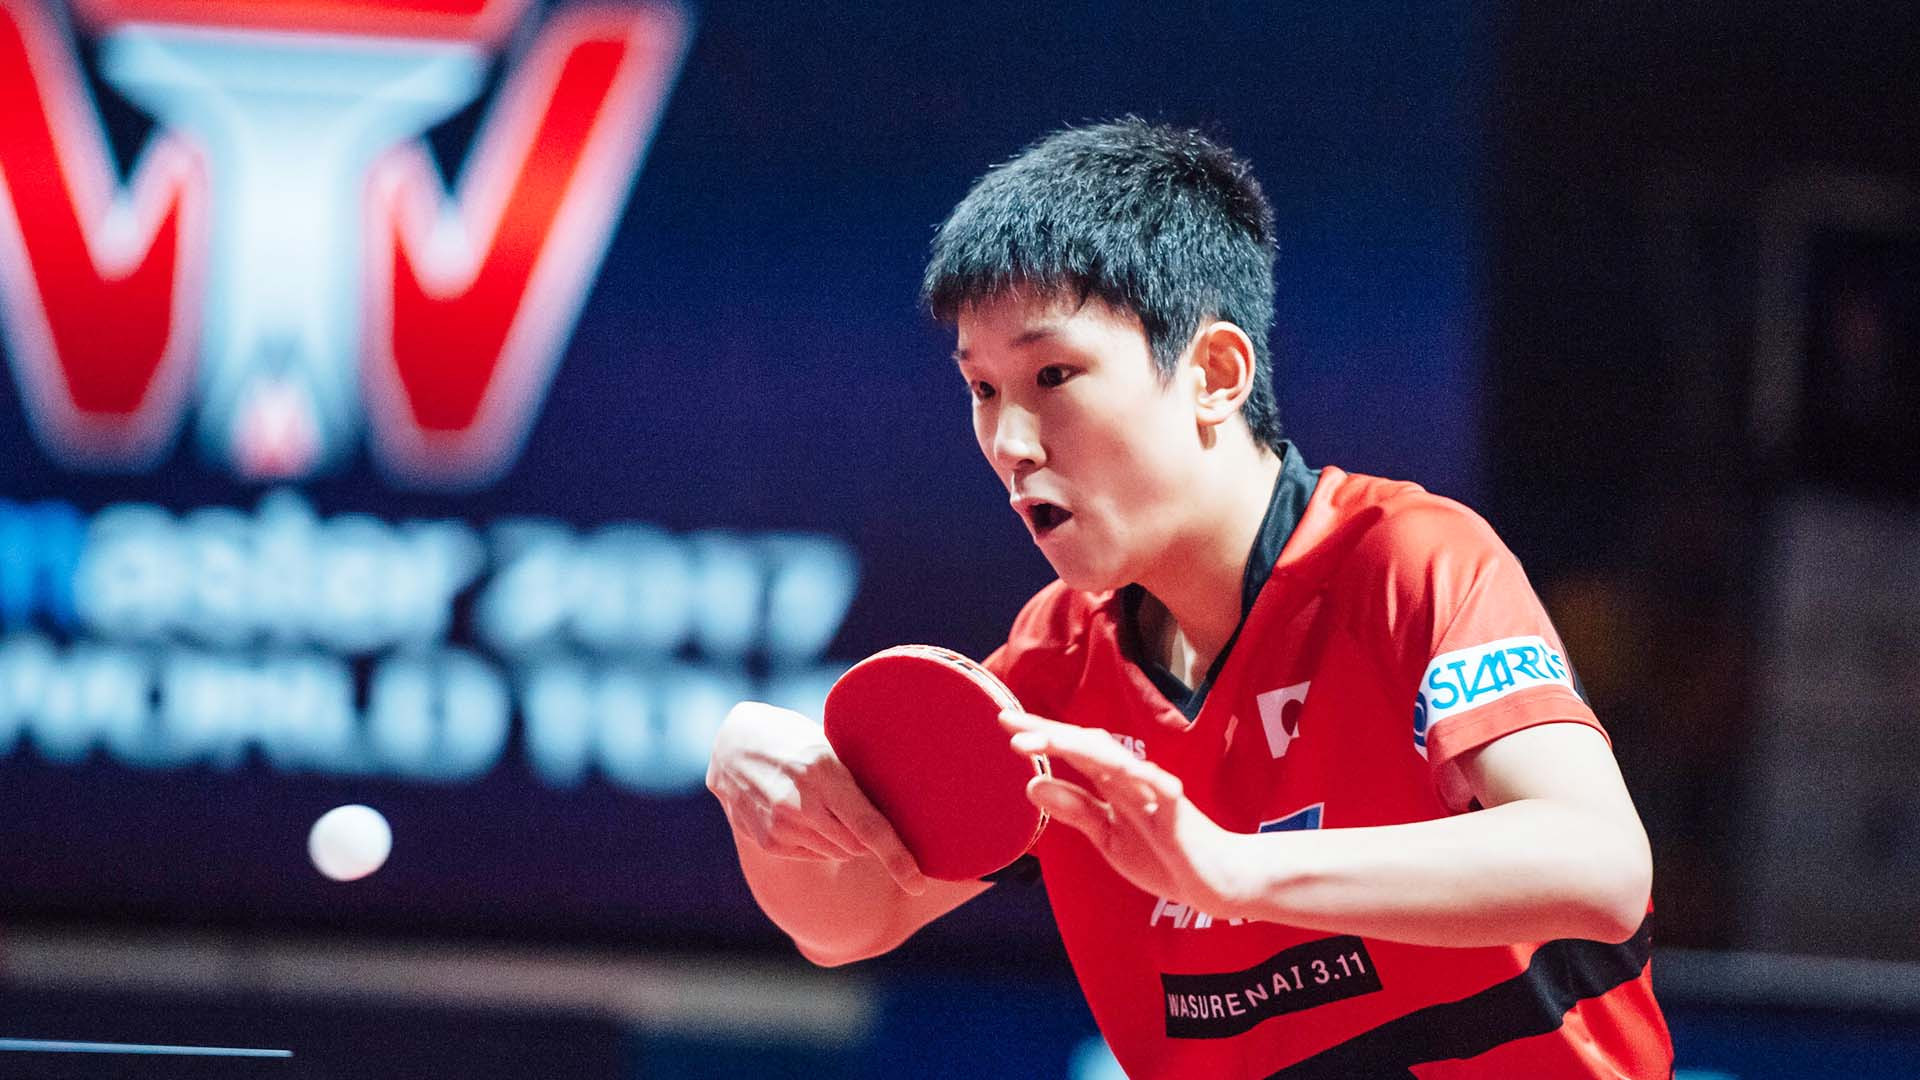 Tomokazu Harimoto is the defending champion in the men's singles draw ©ITTF/Jan Brychta